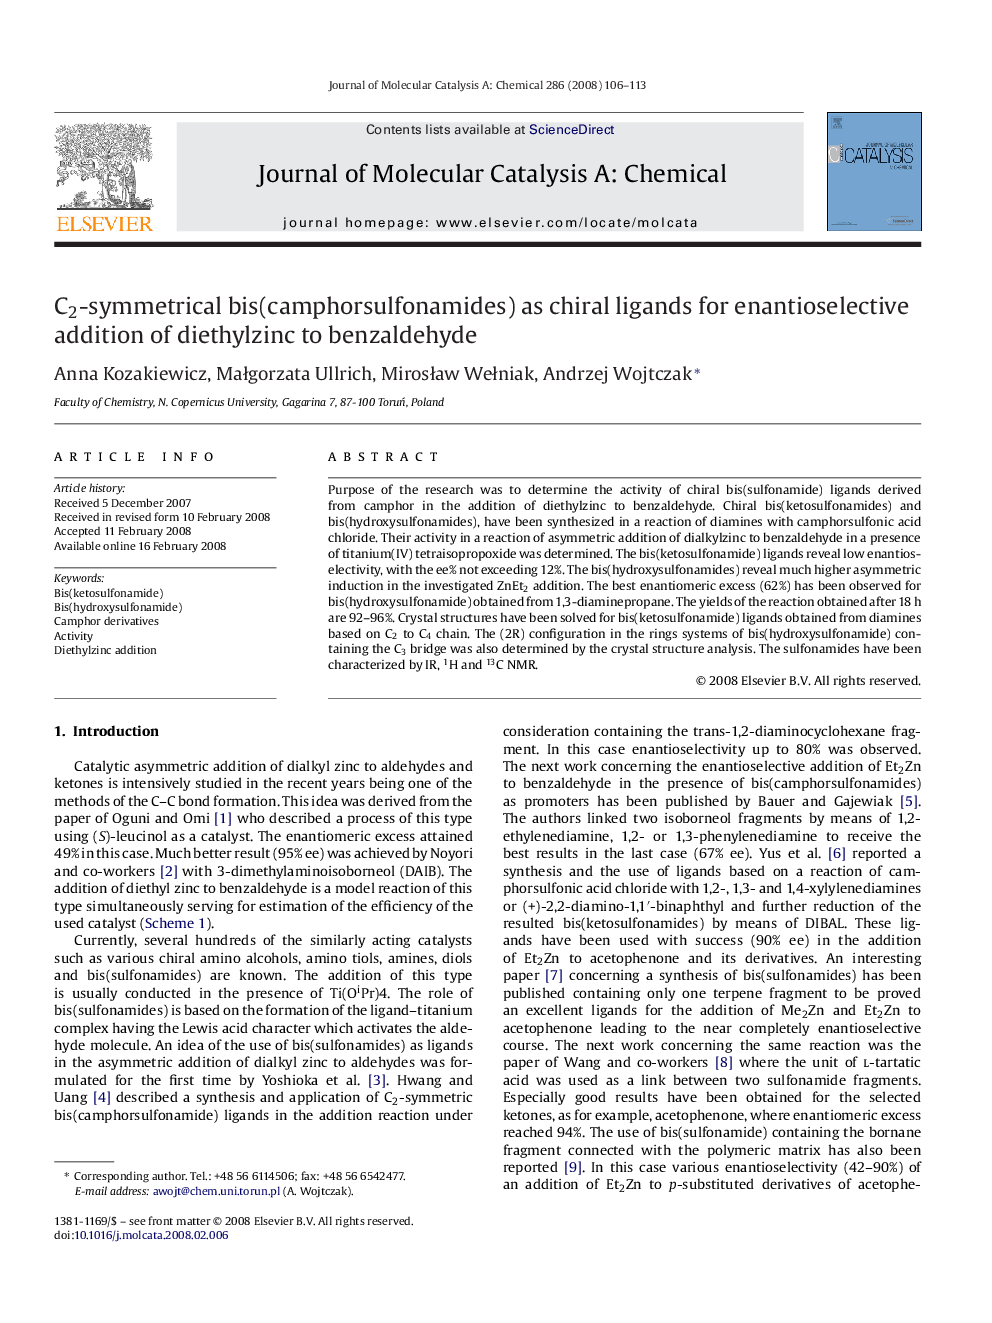 C2-symmetrical bis(camphorsulfonamides) as chiral ligands for enantioselective addition of diethylzinc to benzaldehyde